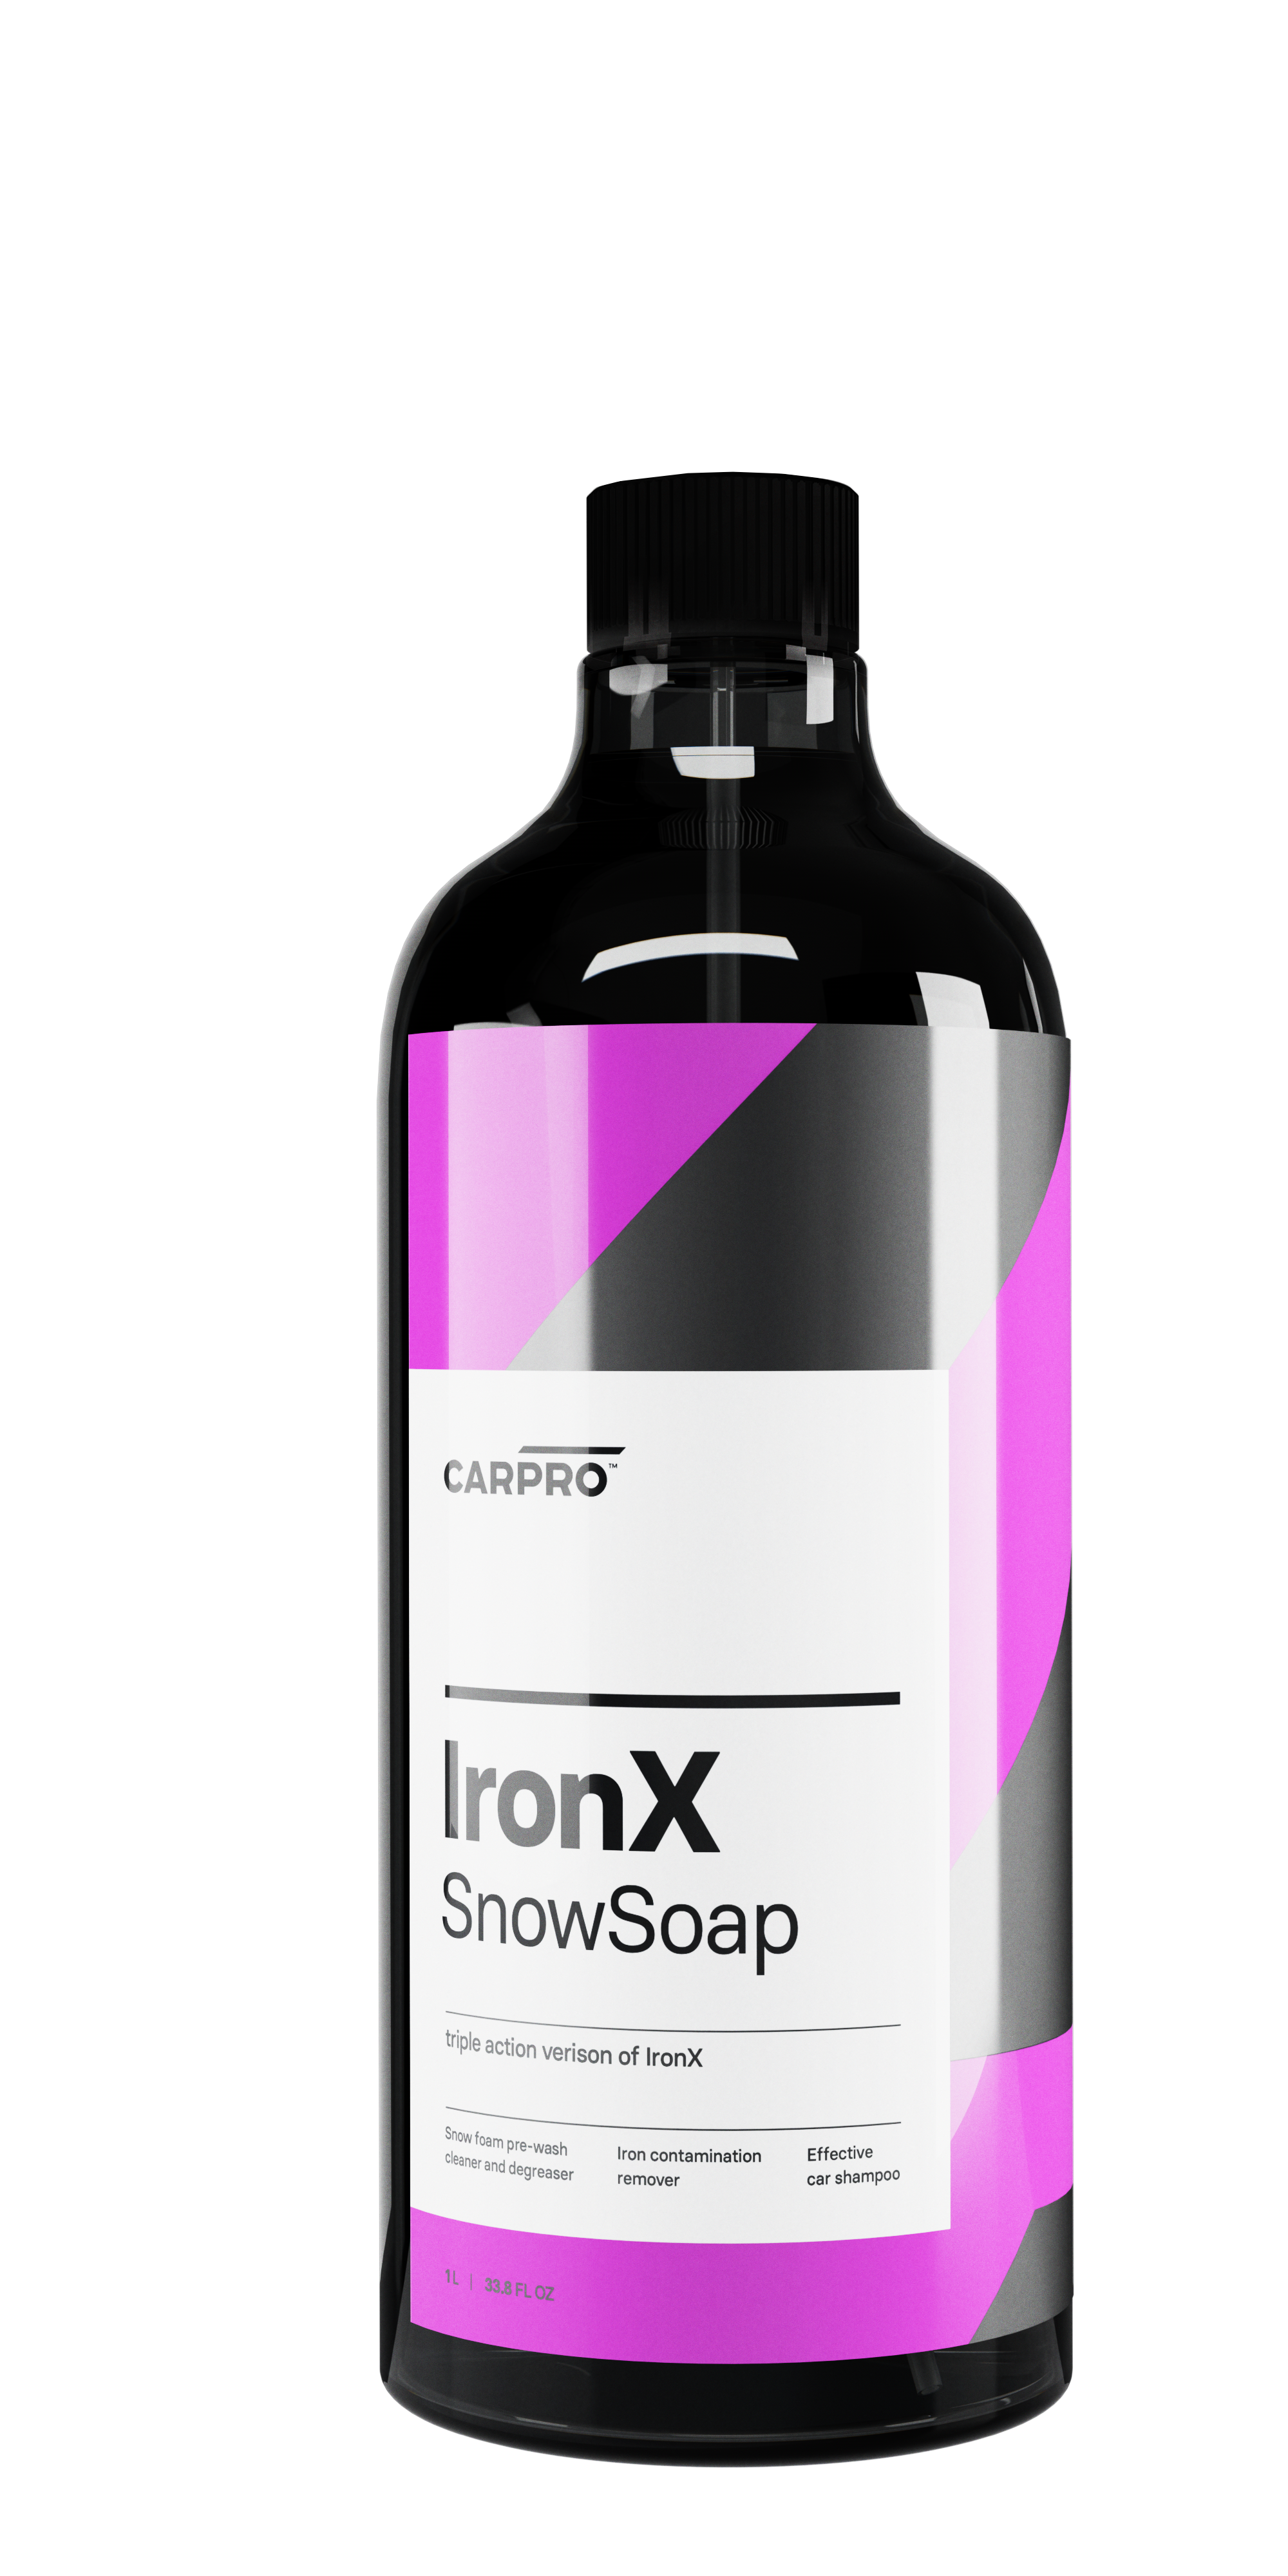 CARPRO IronX Snow Soap 1L - Triple action car shampoo